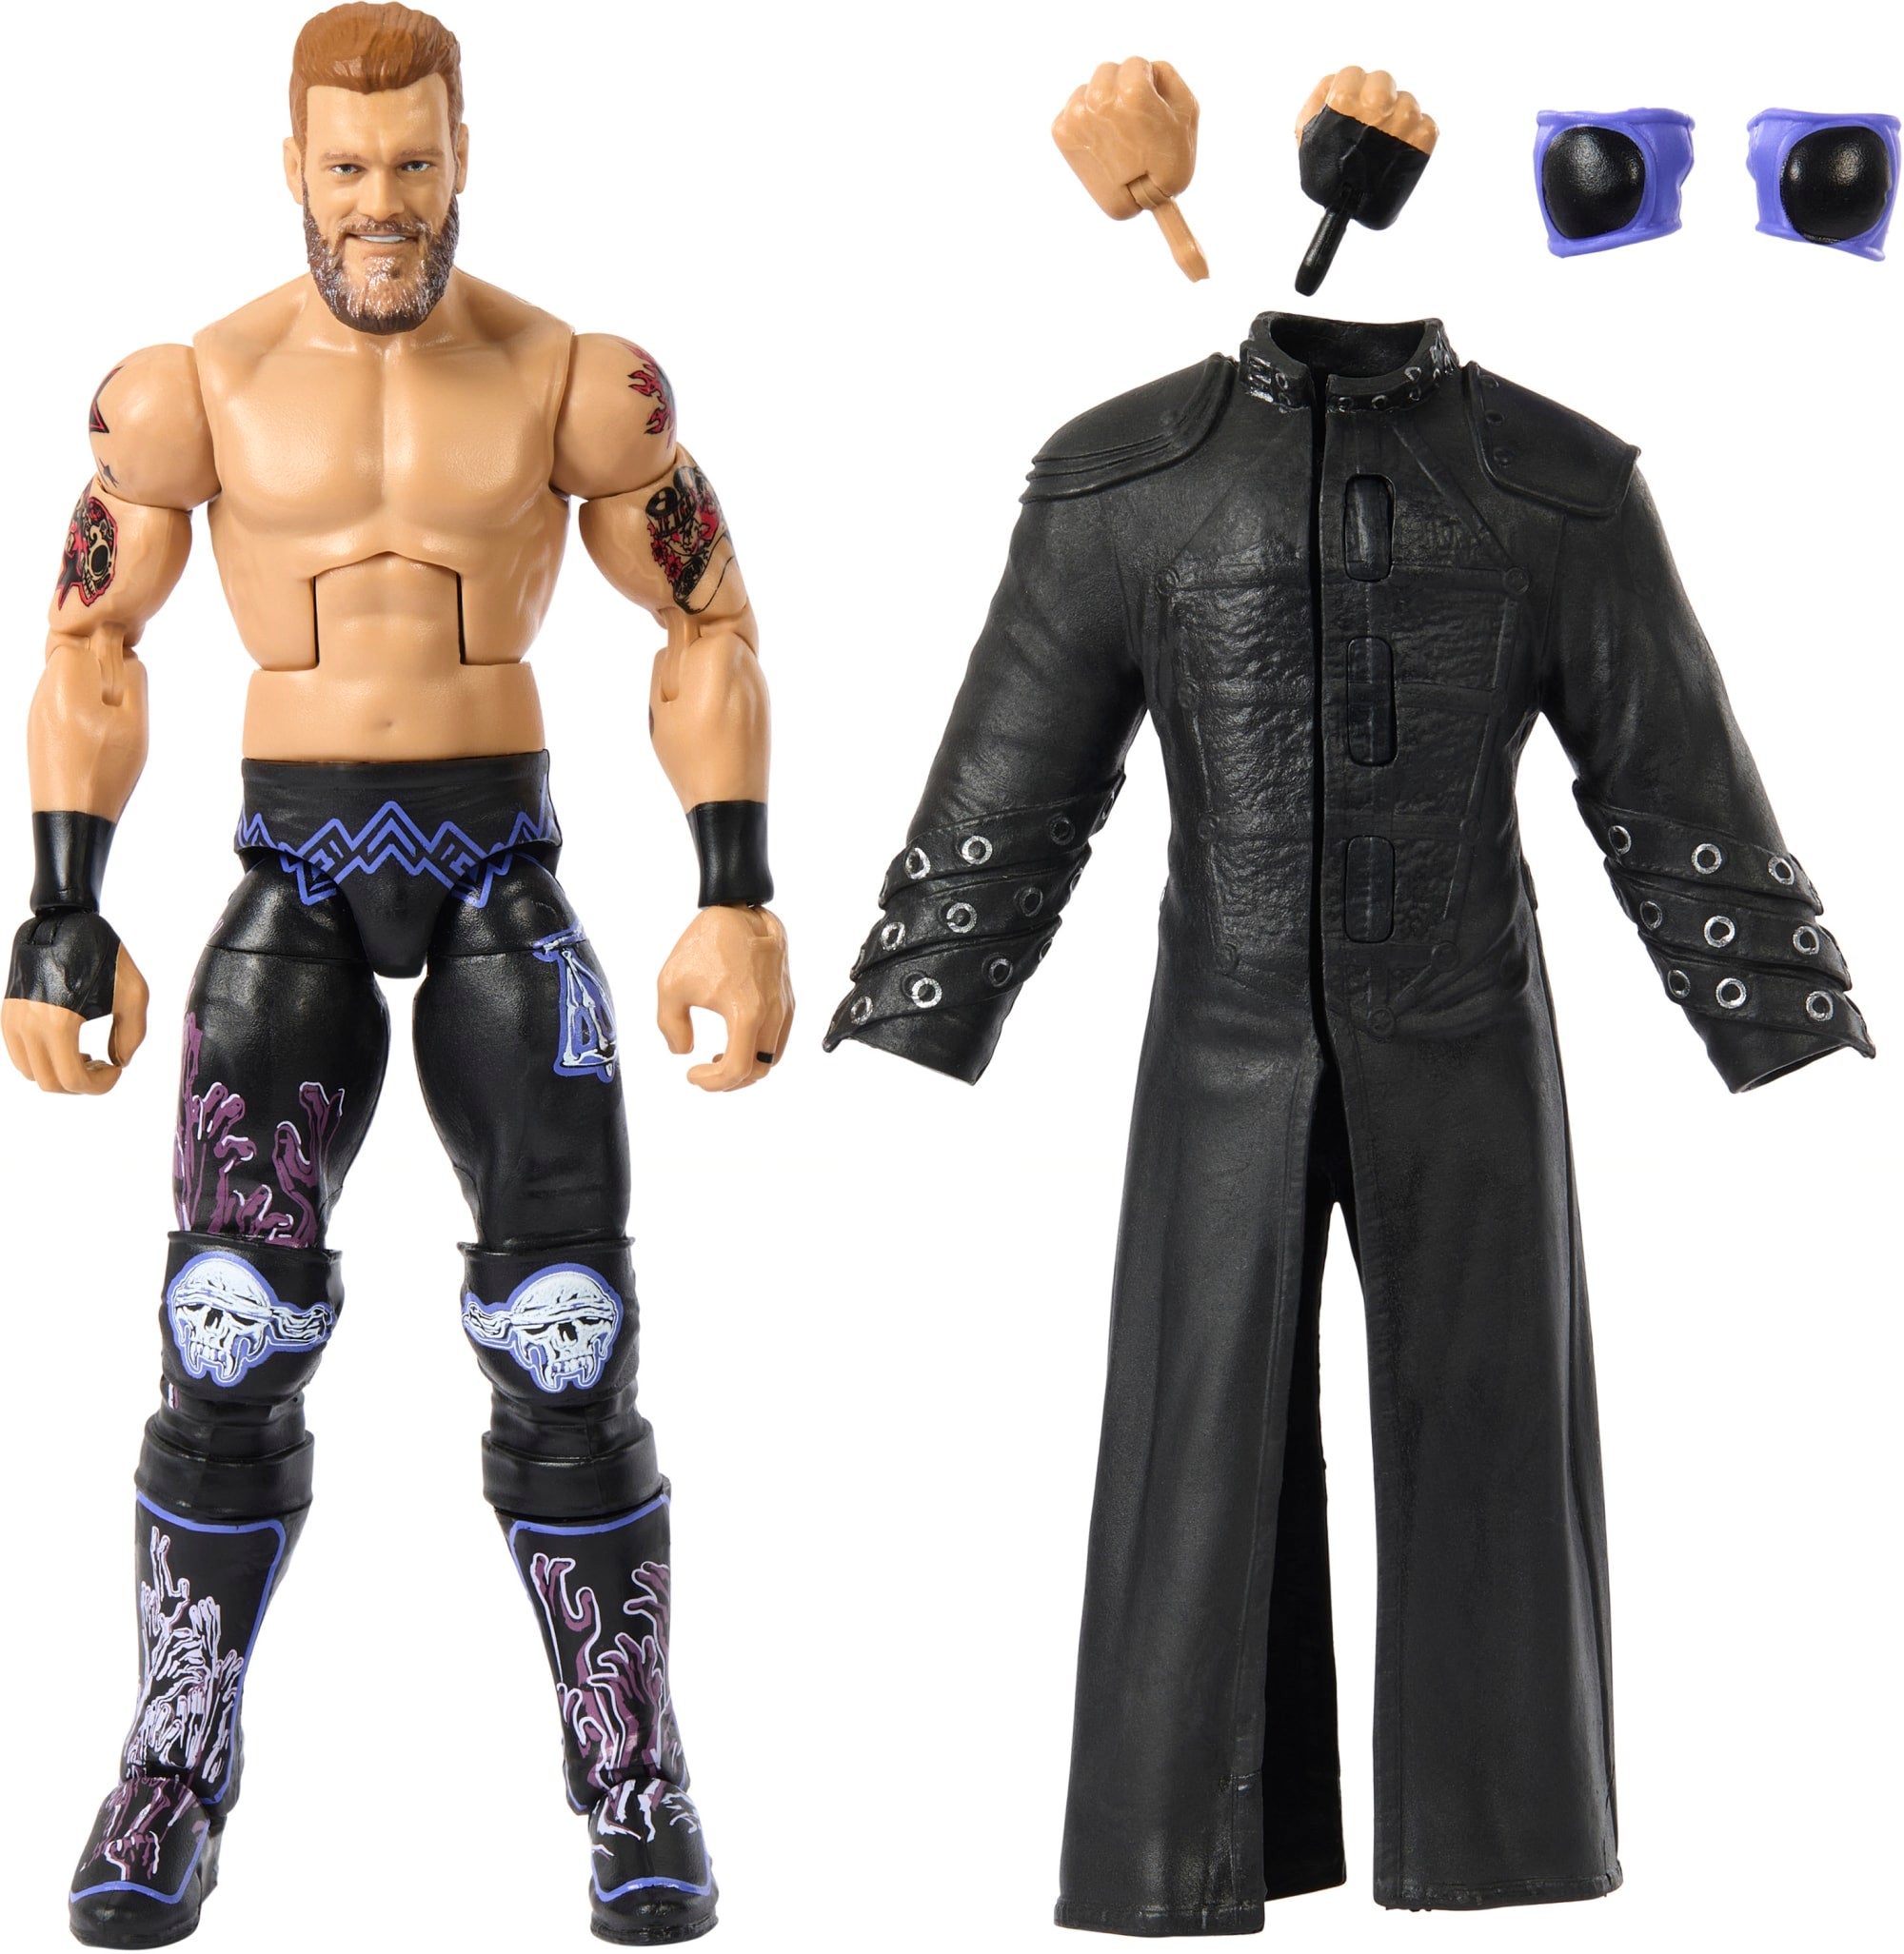 WWE Elite Collection Edge Action Figure